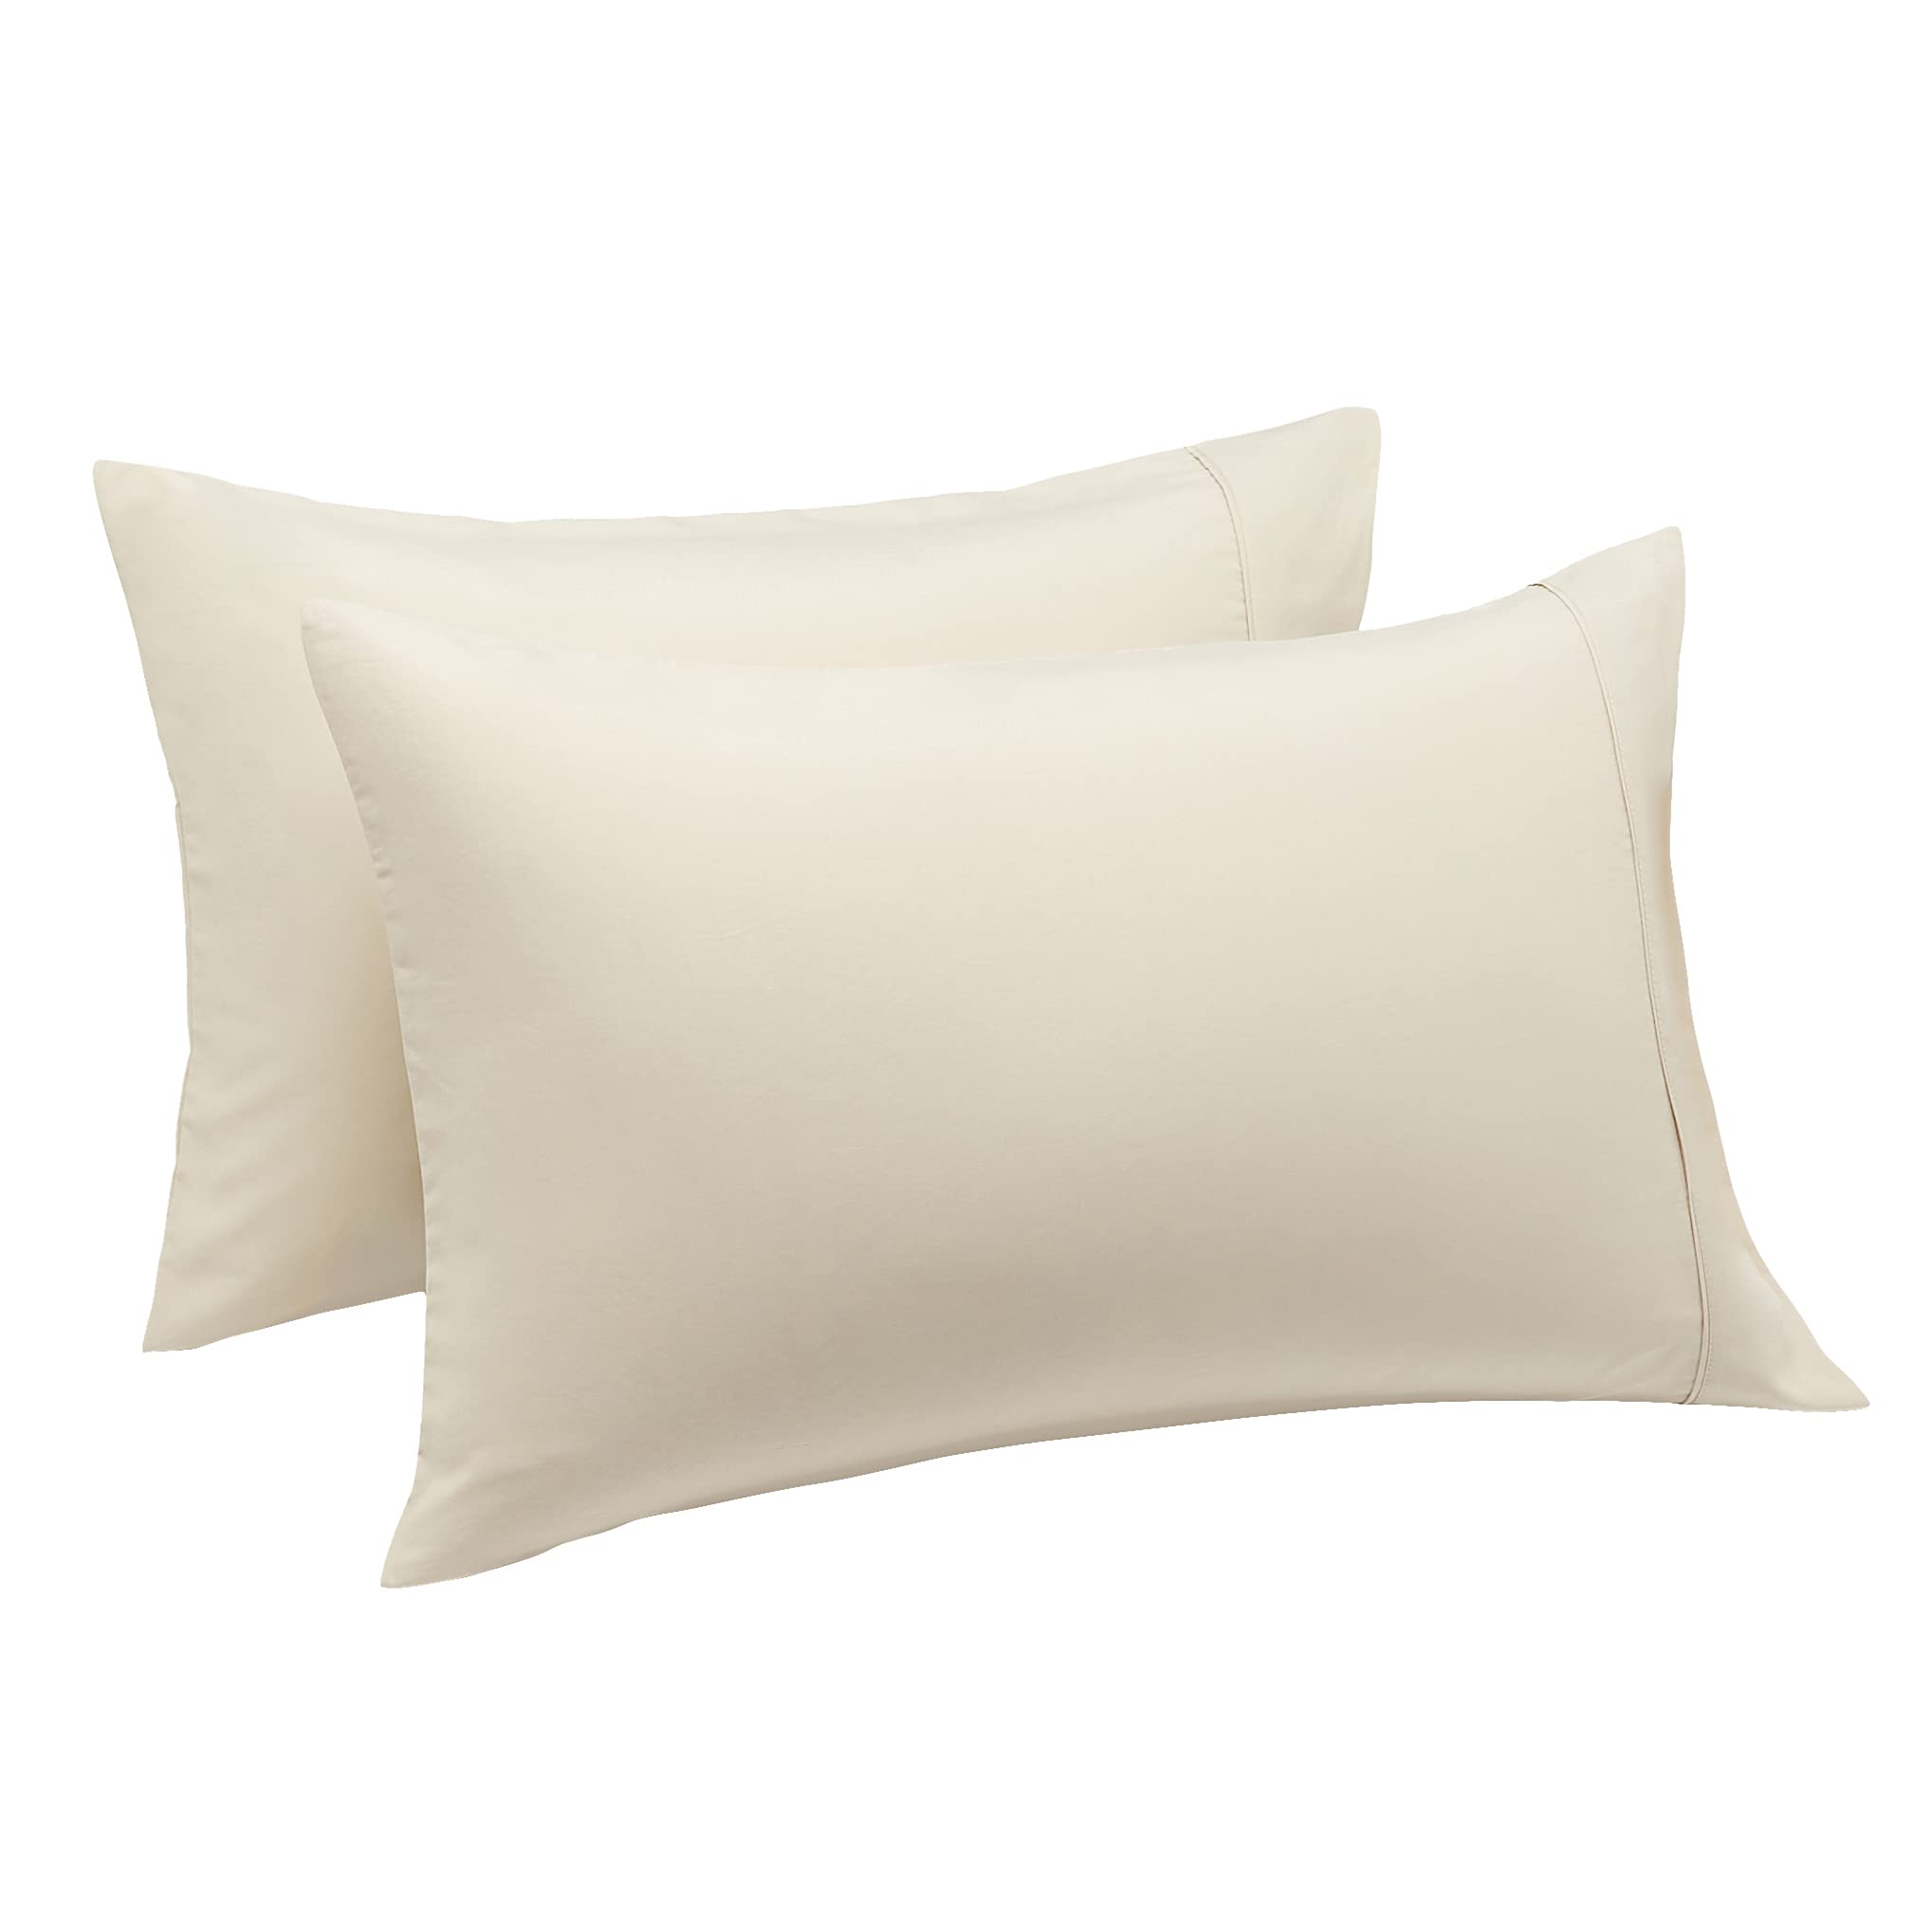 Book Cover Amazon Basics Lightweight Super Soft Easy Care Microfiber Pillowcases - 2-Pack - King, Beige King Pillowcases Beige